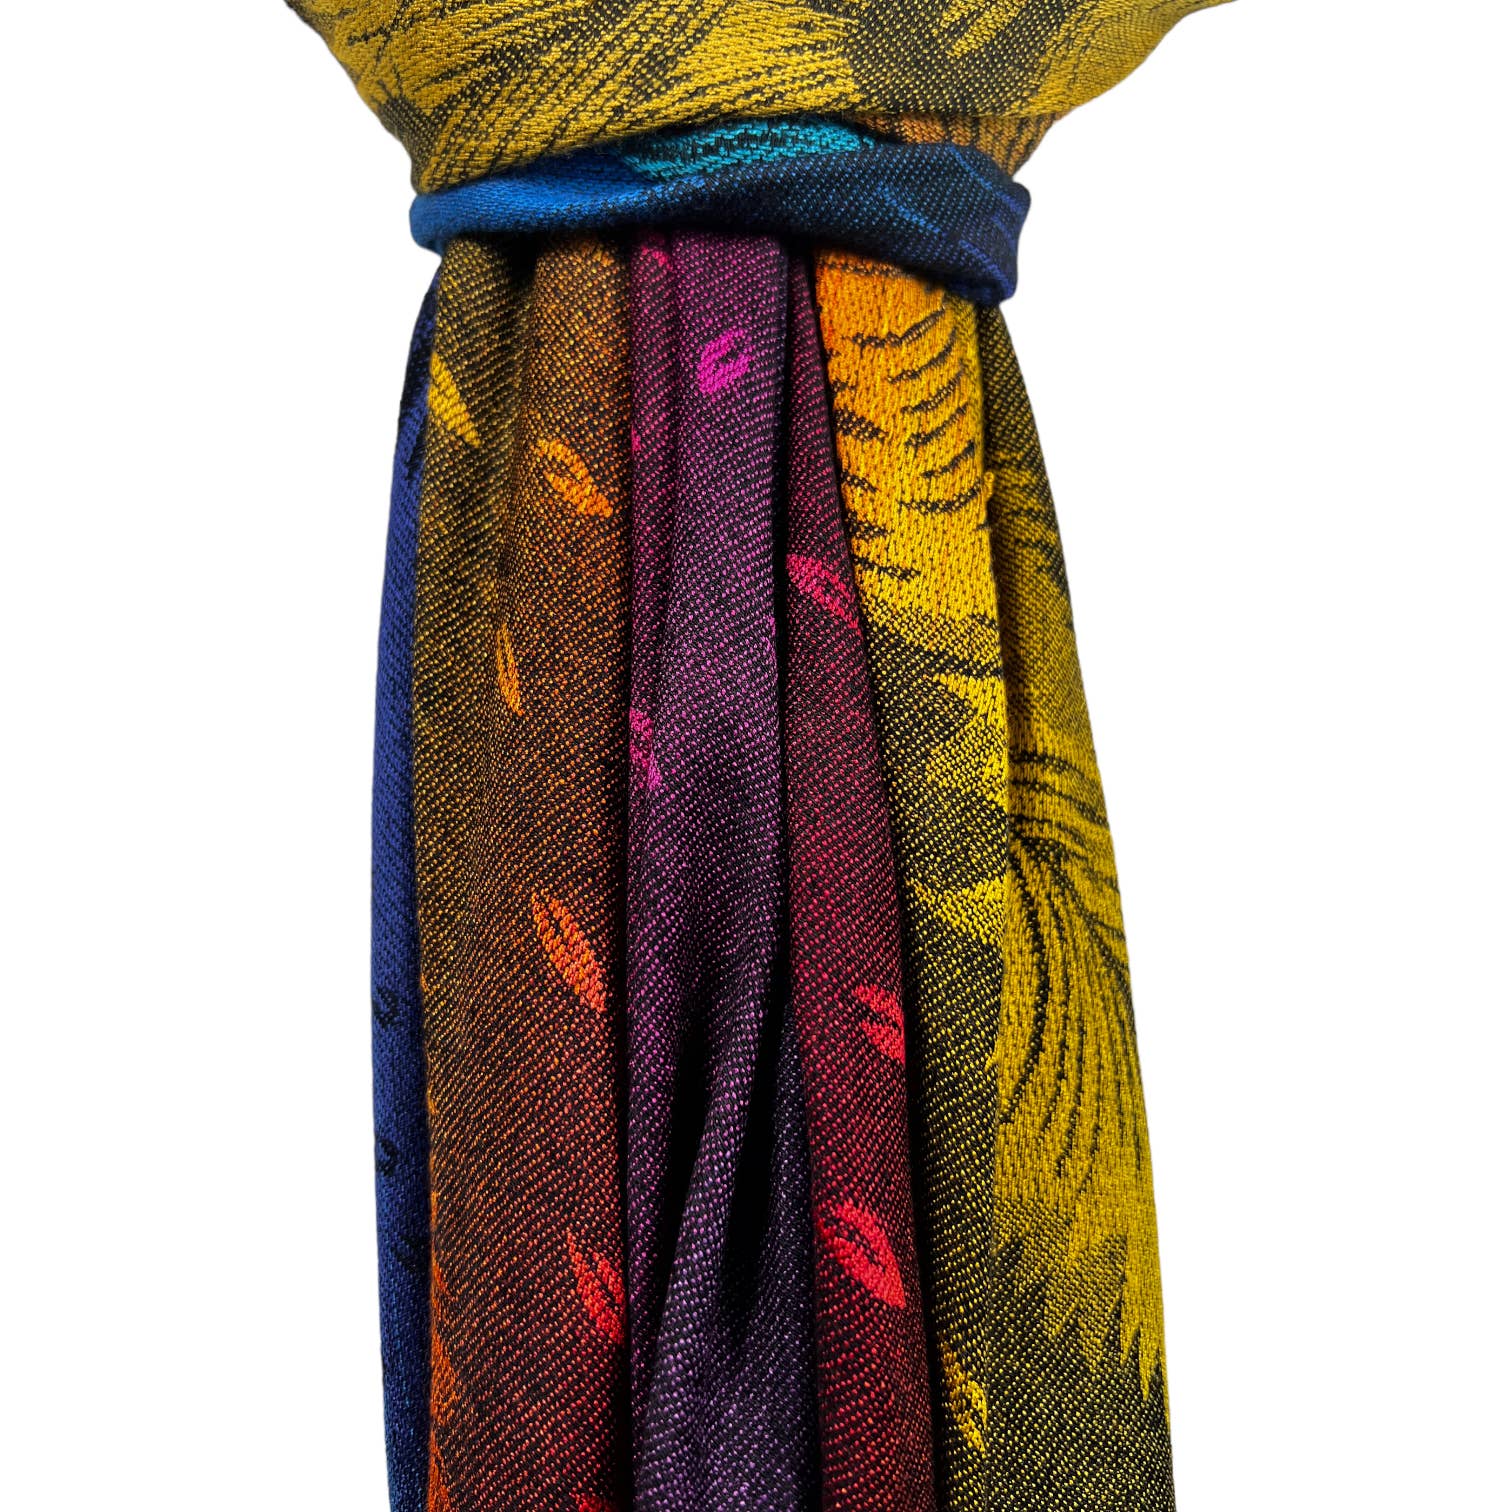 Rainbow Pashmina feather print with tassels: Black - The Nancy Smillie Shop - Art, Jewellery & Designer Gifts Glasgow